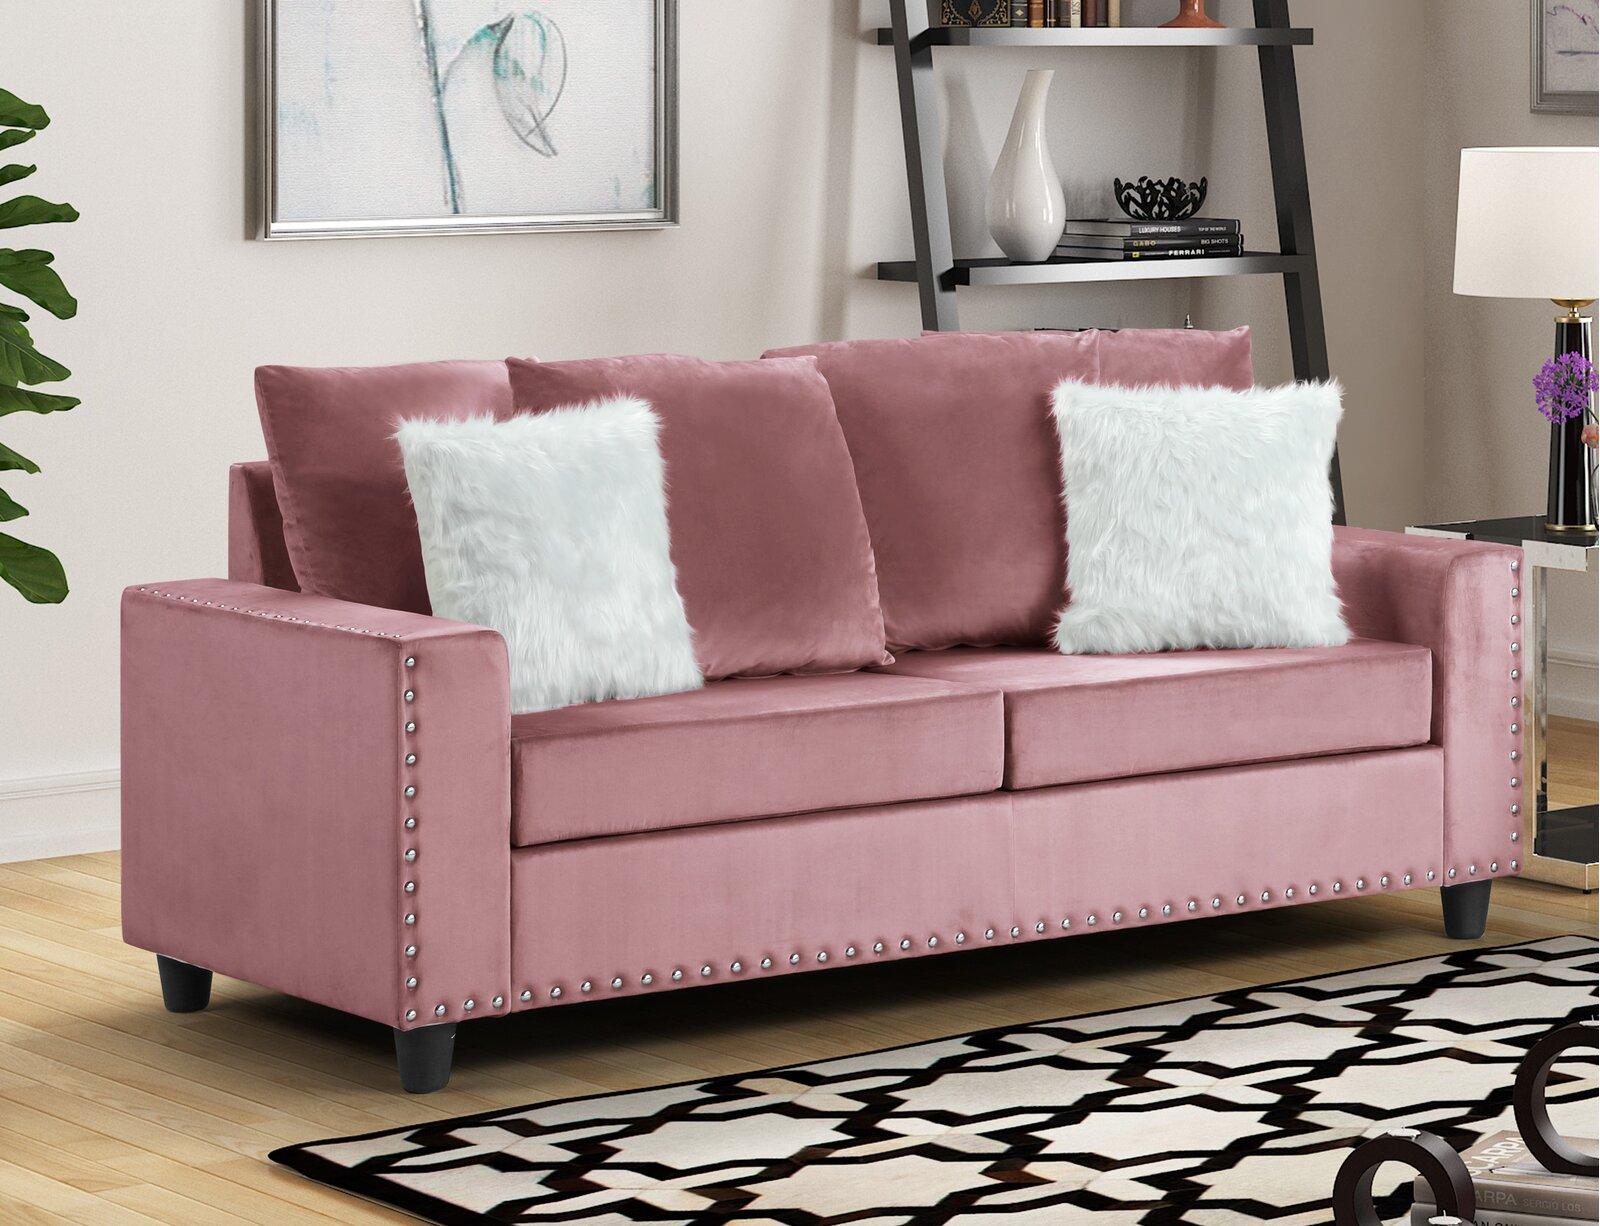 

    
Pink Fabric Sofa MORRIS Galaxy Home Contemporary Modern
